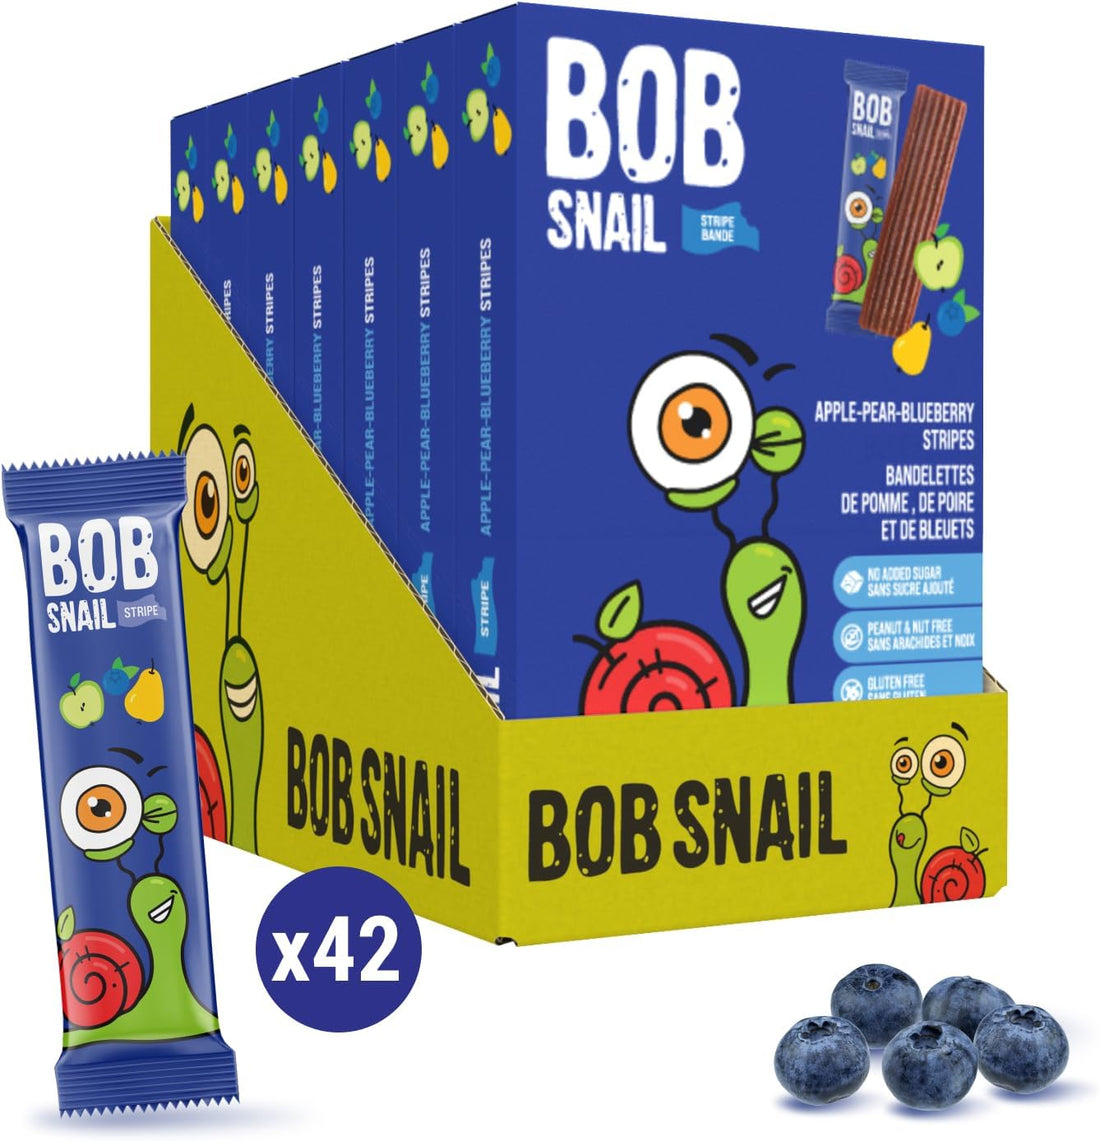 Bob Snail Fruit Stripes Apple-Pear-Blueberry Pack of 7 (European)